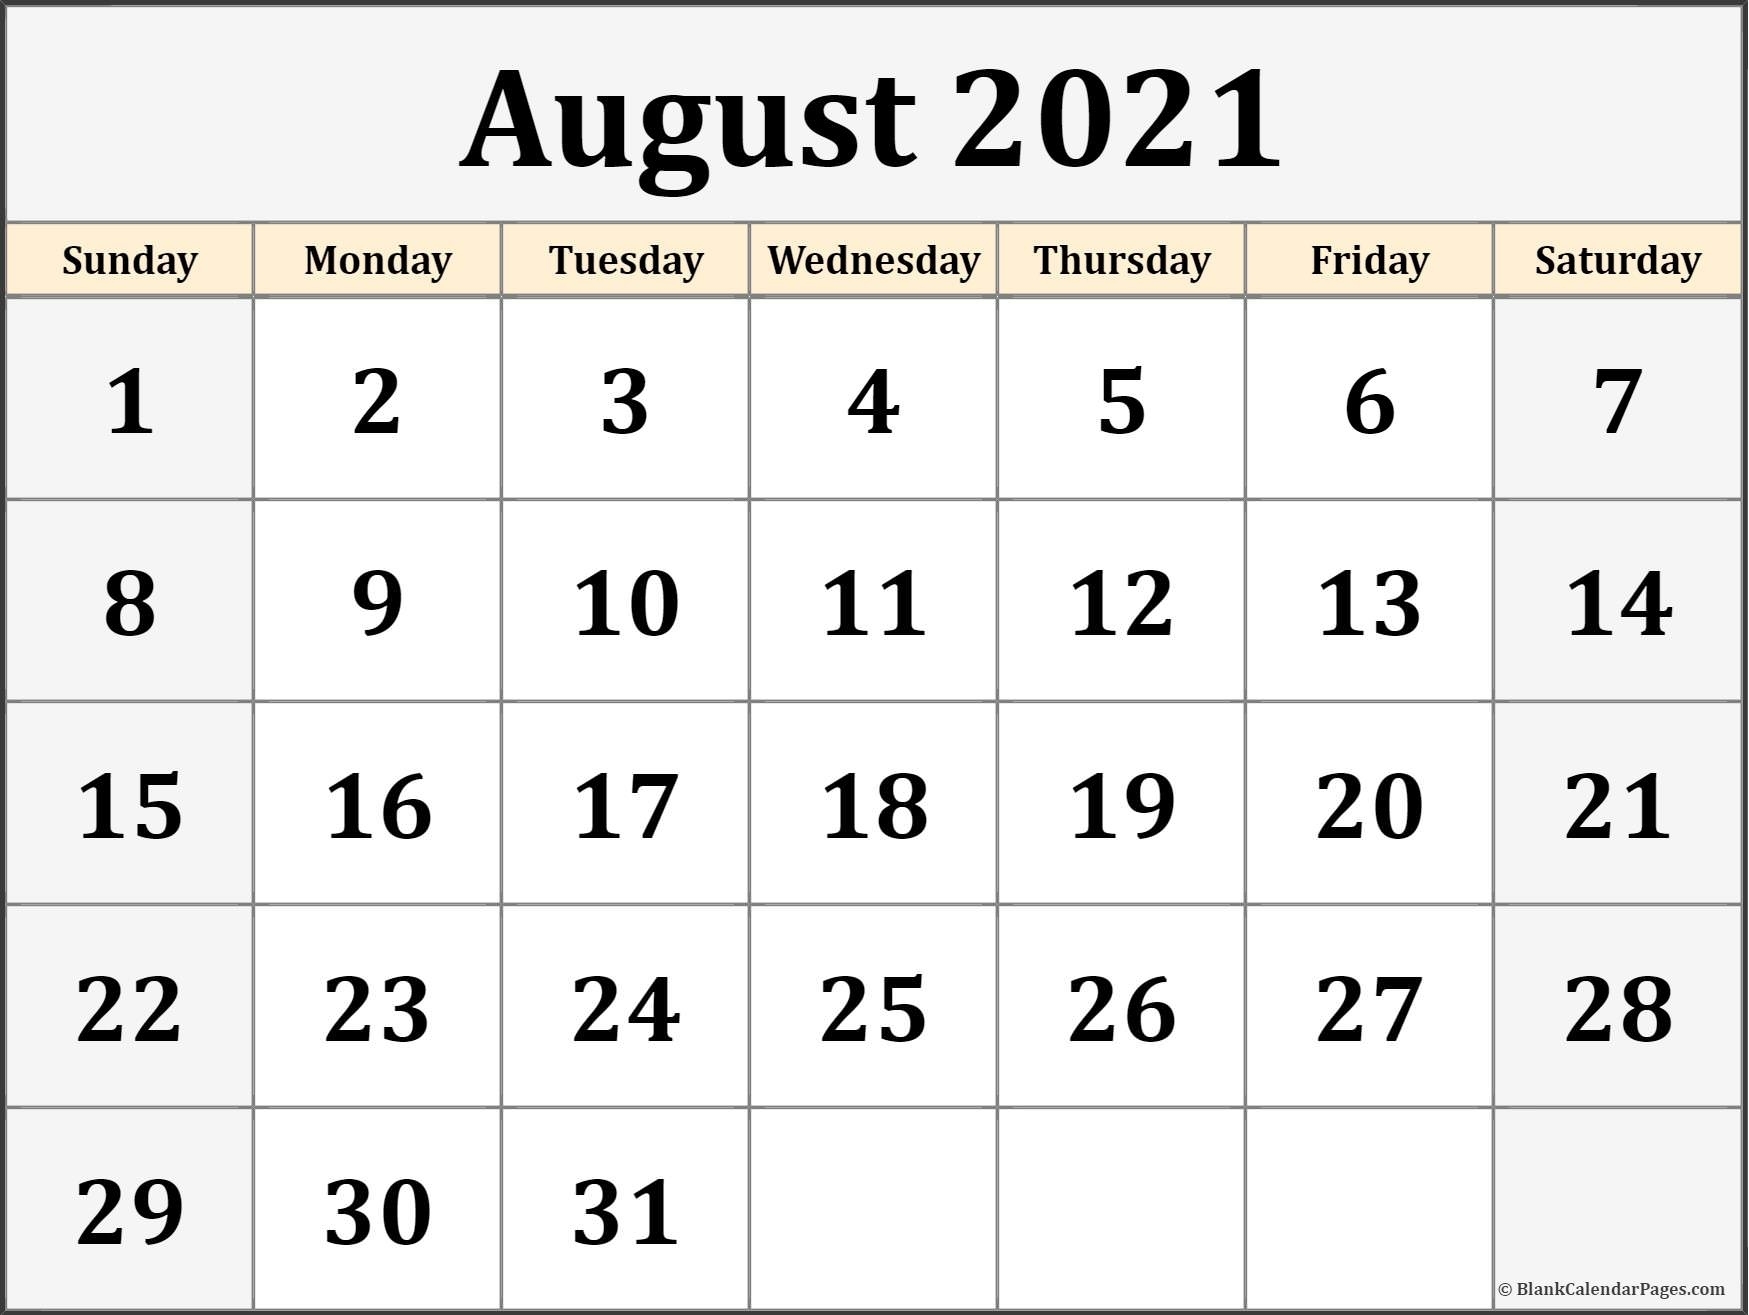 August 2021 Calendar | Free Printable Calendar August 2021 Calendar Hindi